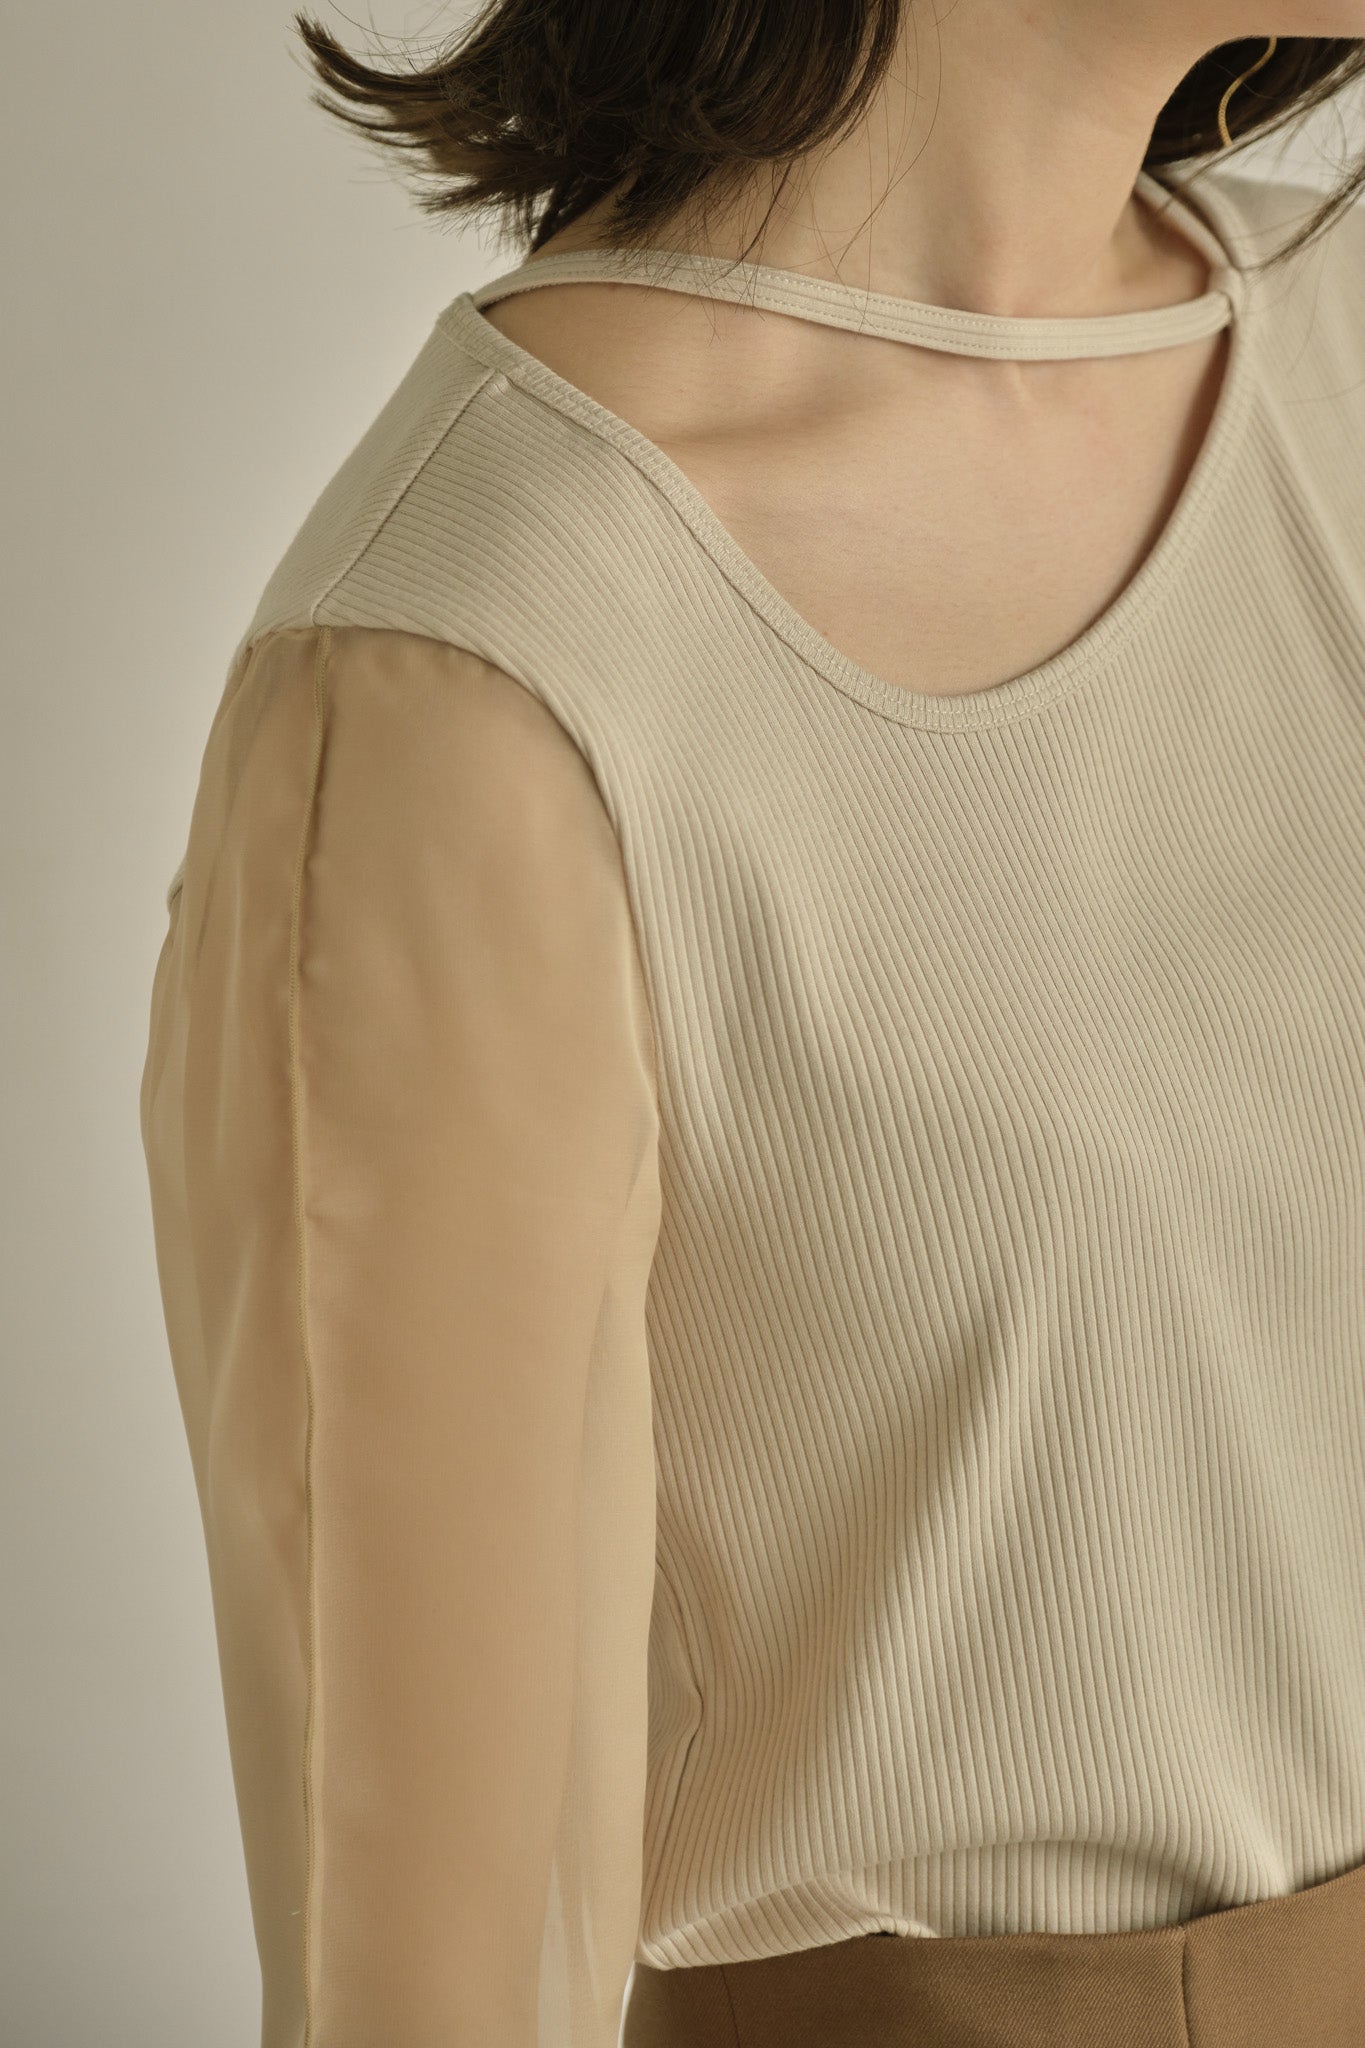 Eaphi sheer sleeve strap tops - Tシャツ/カットソー(七分/長袖)